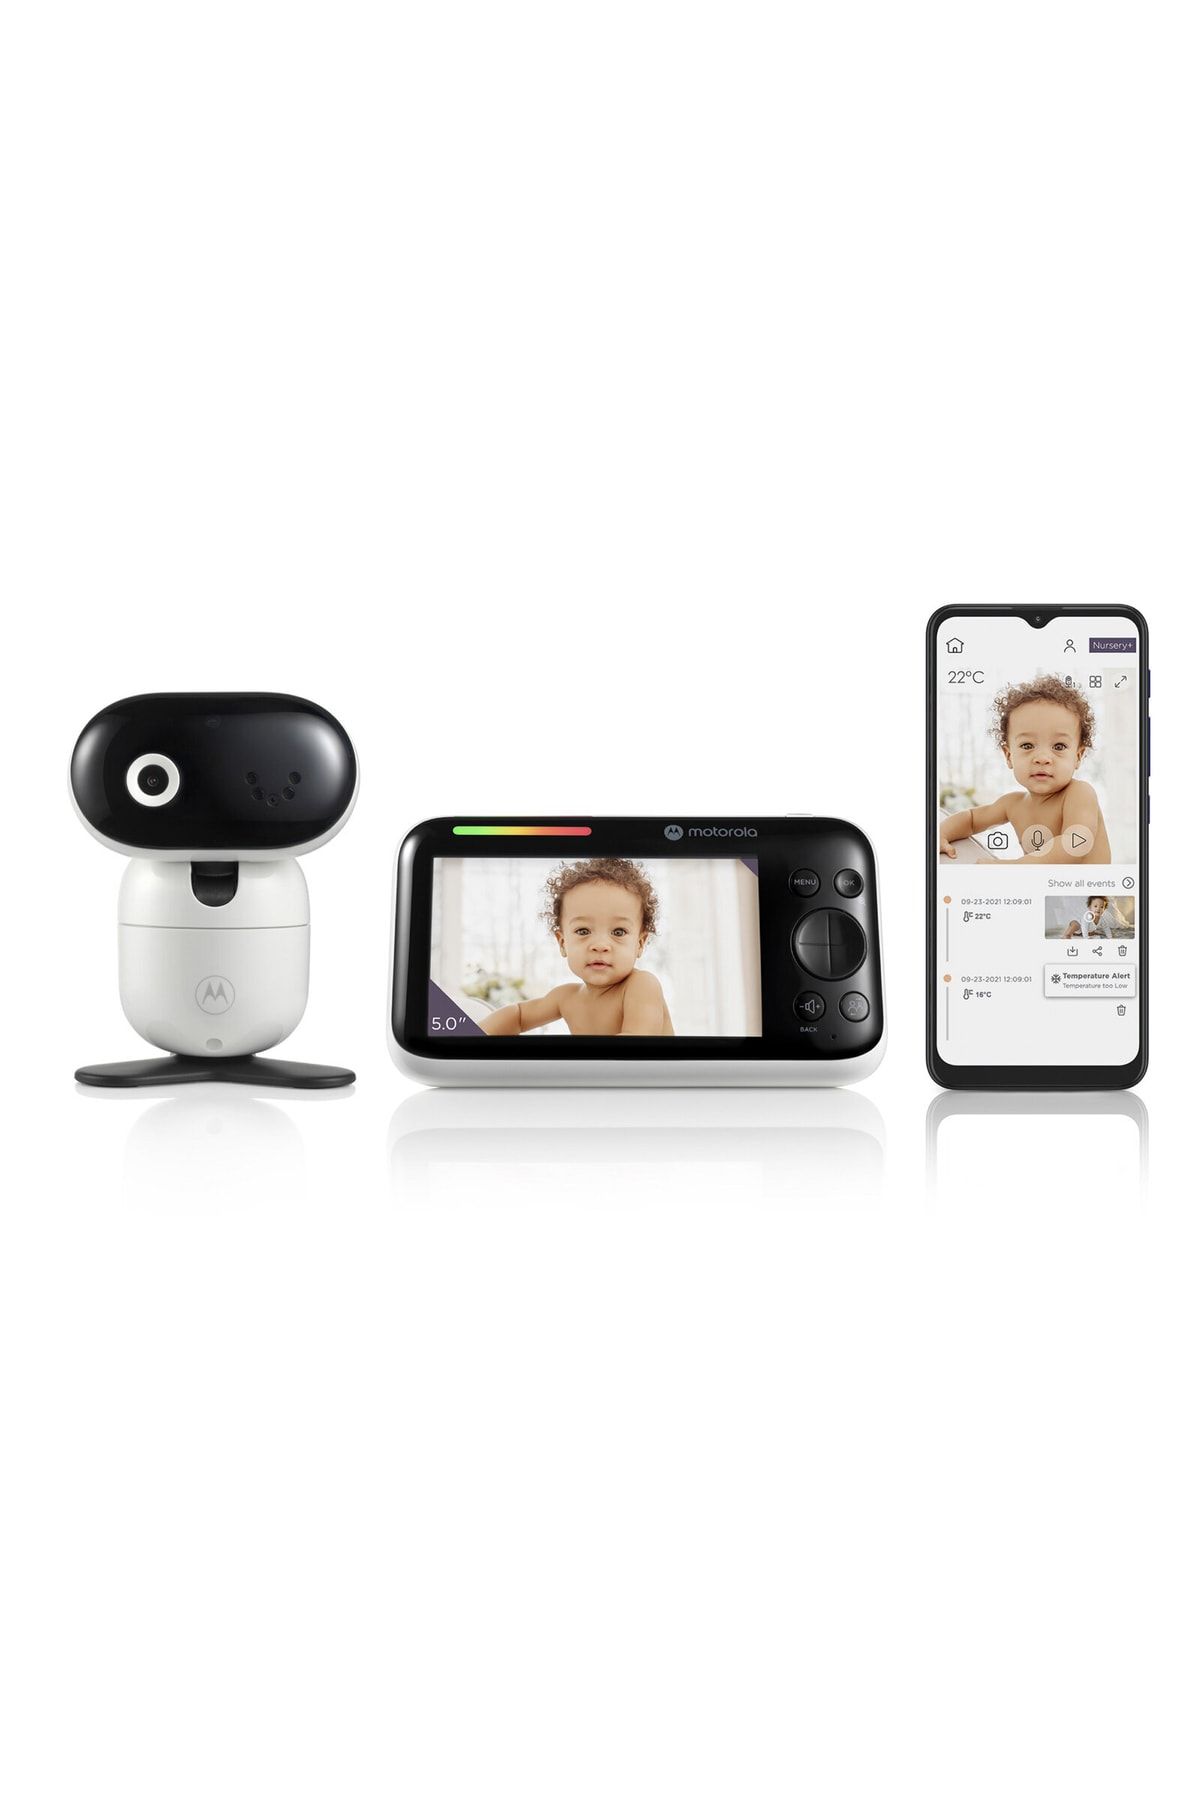 Motorola Fhd Wifi Connect Bebek Kamerası 5 Inç Lcd